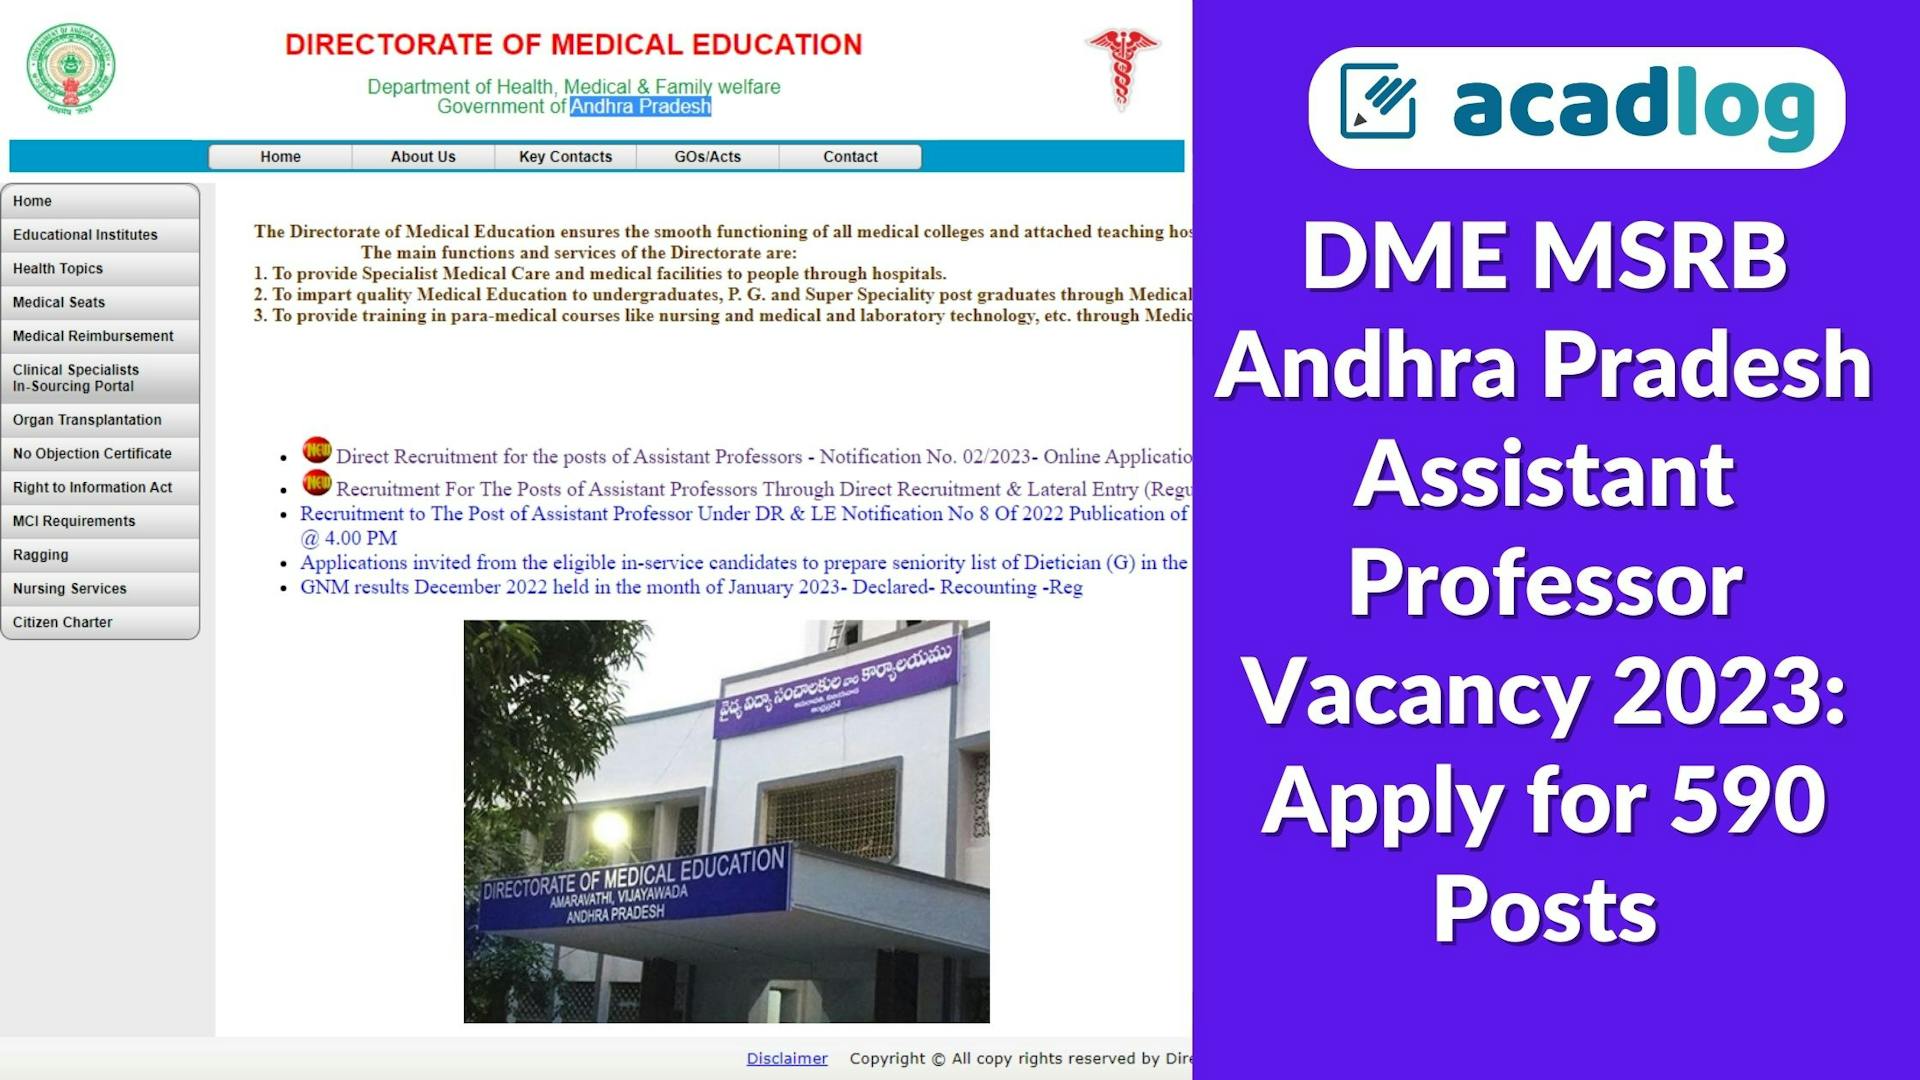 DME MSRB Andhra Pradesh Assistant Professor Vacancy 2023: Apply for 590 Posts